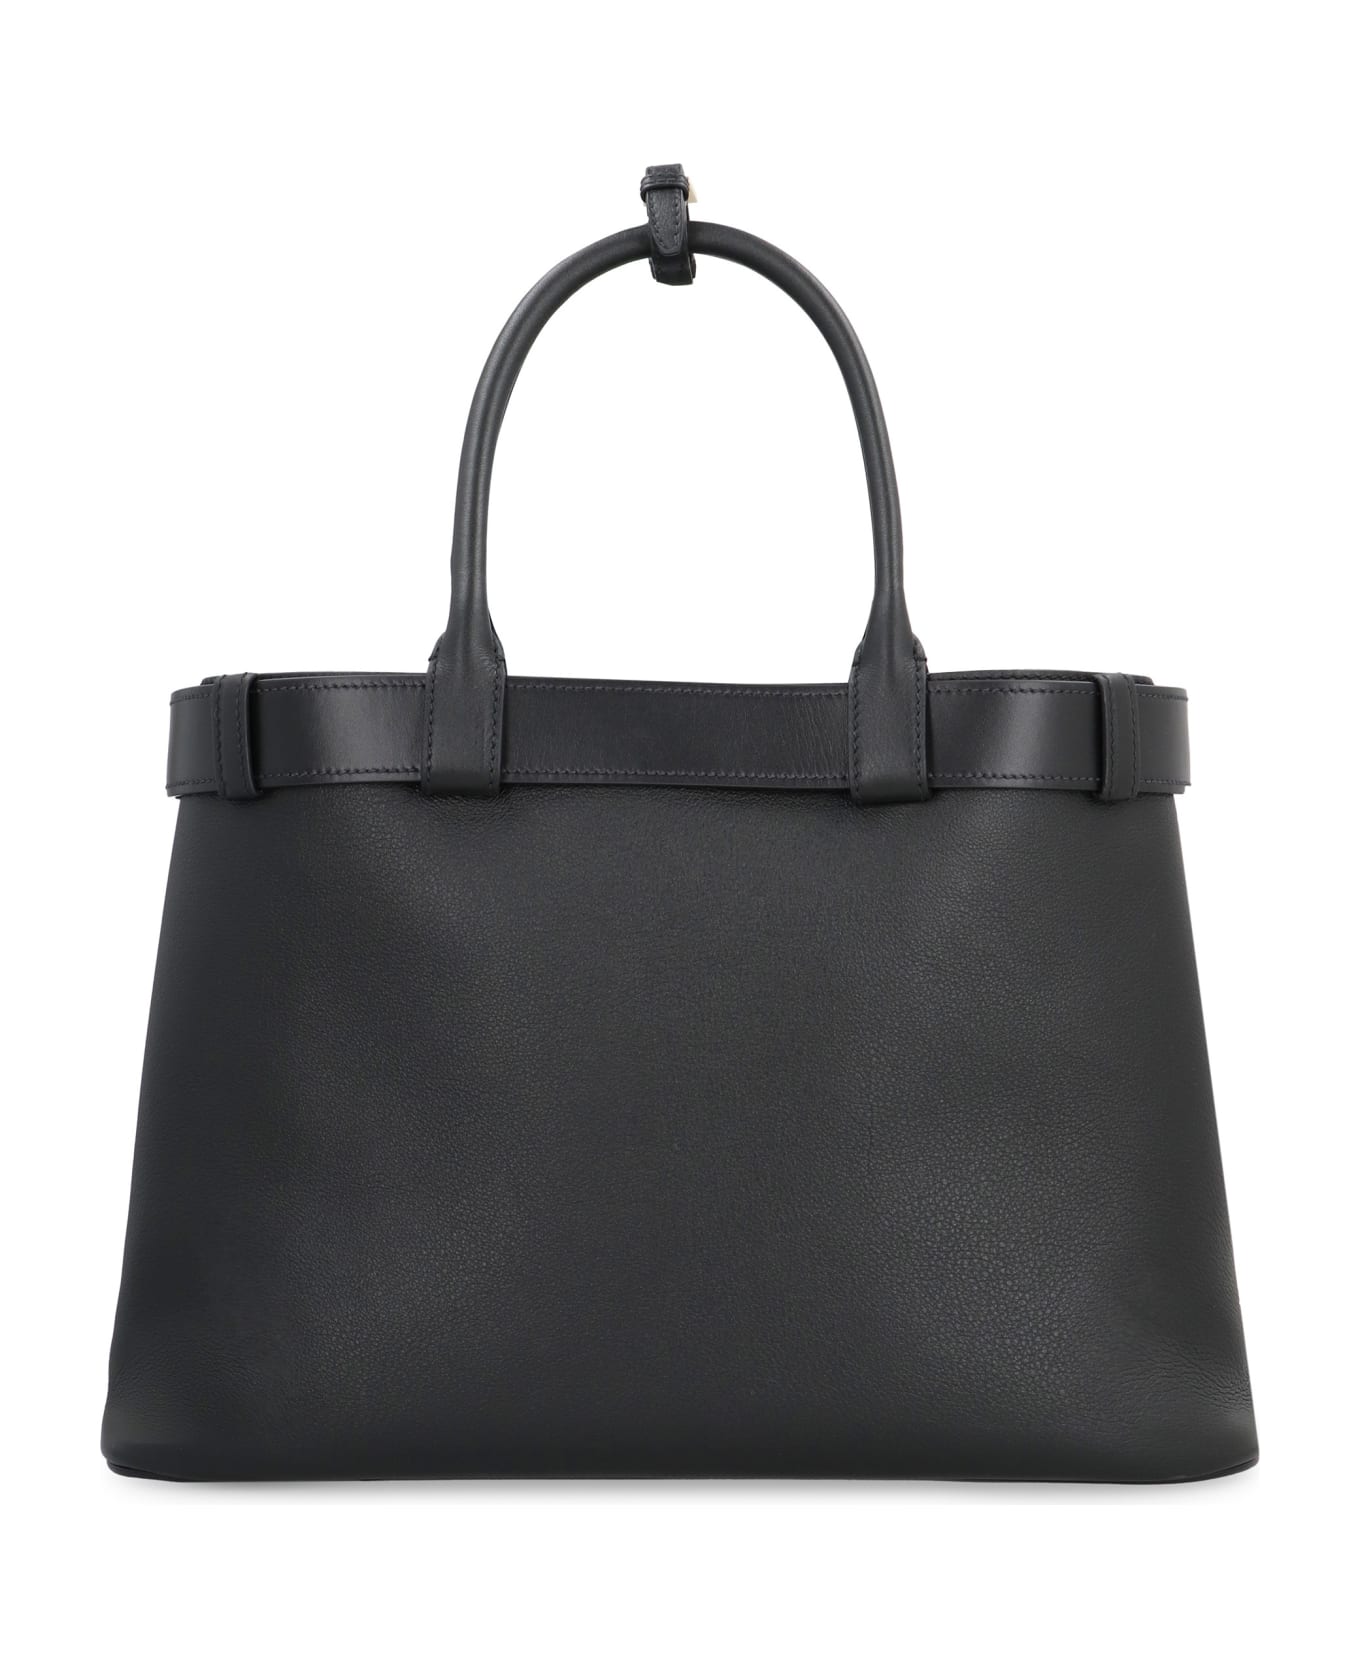 Prada Buckle Leather Bag - black トートバッグ